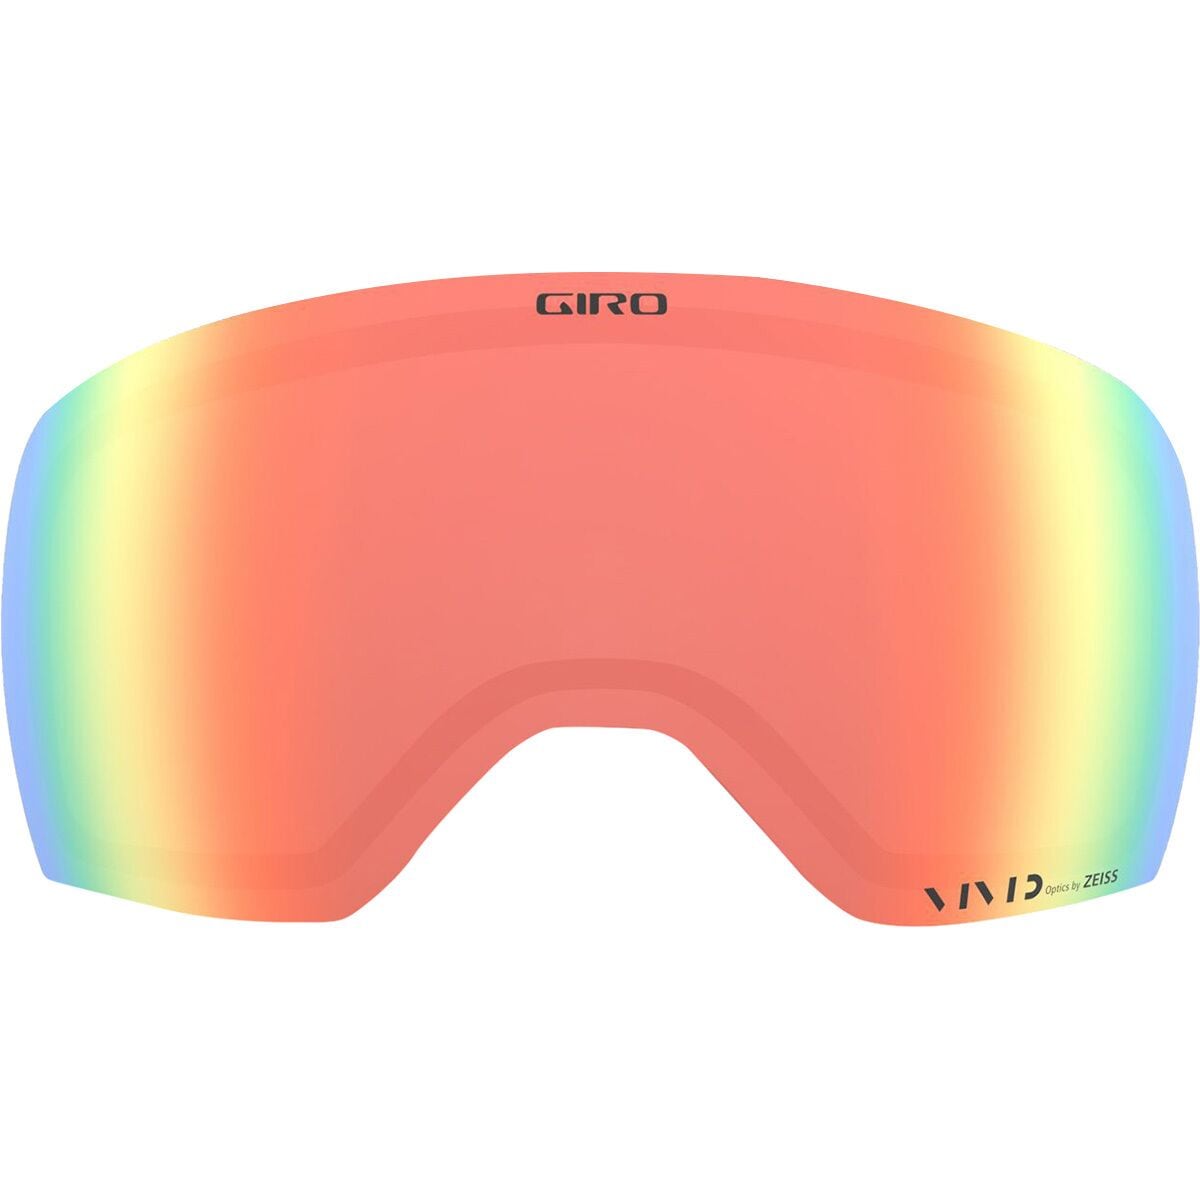 Giro Article II Goggle Replacement Lens